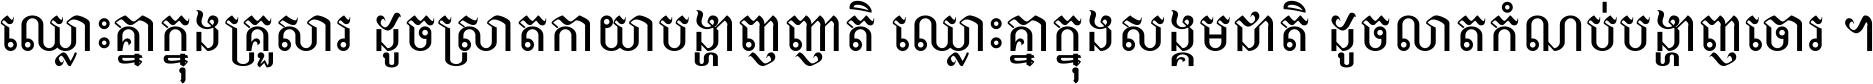 Kh Ang PheaSaKhmer